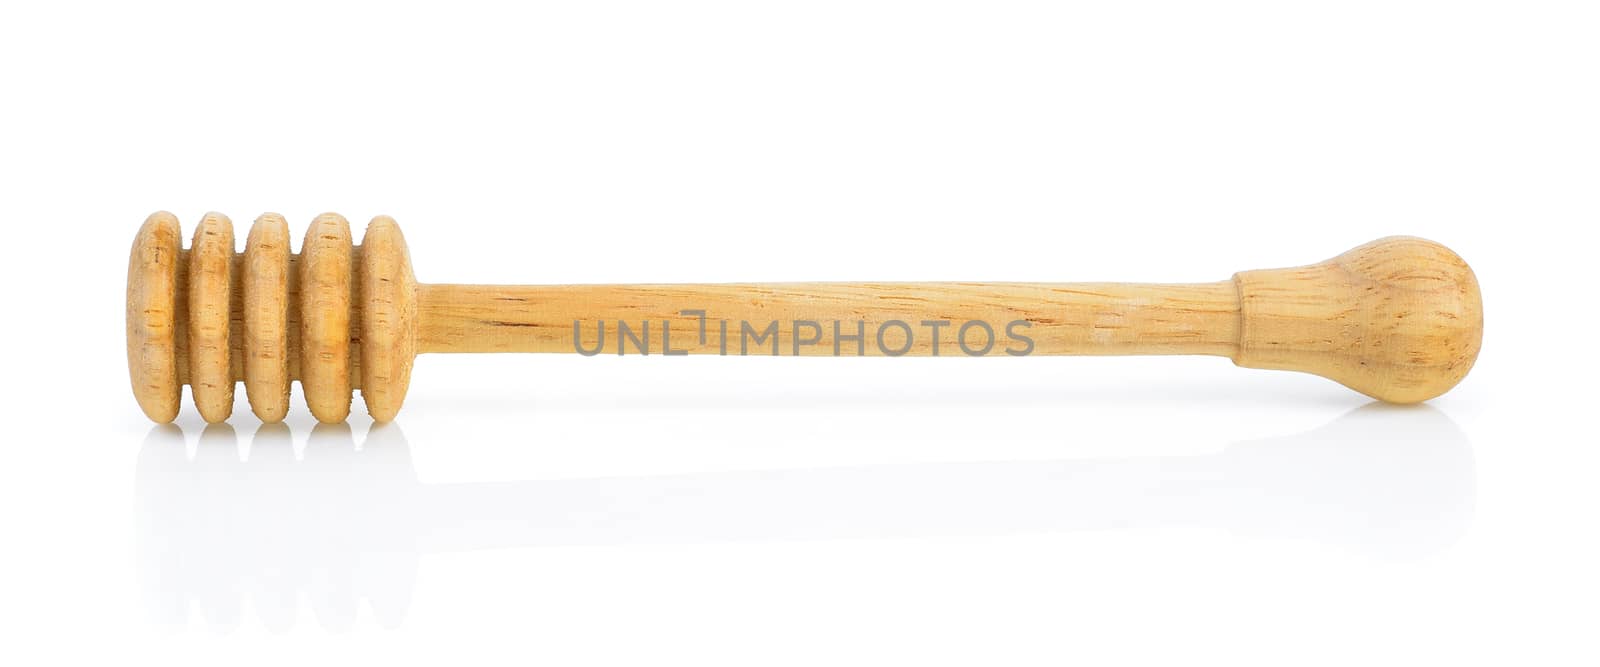 wooden honey stick isolated on white background